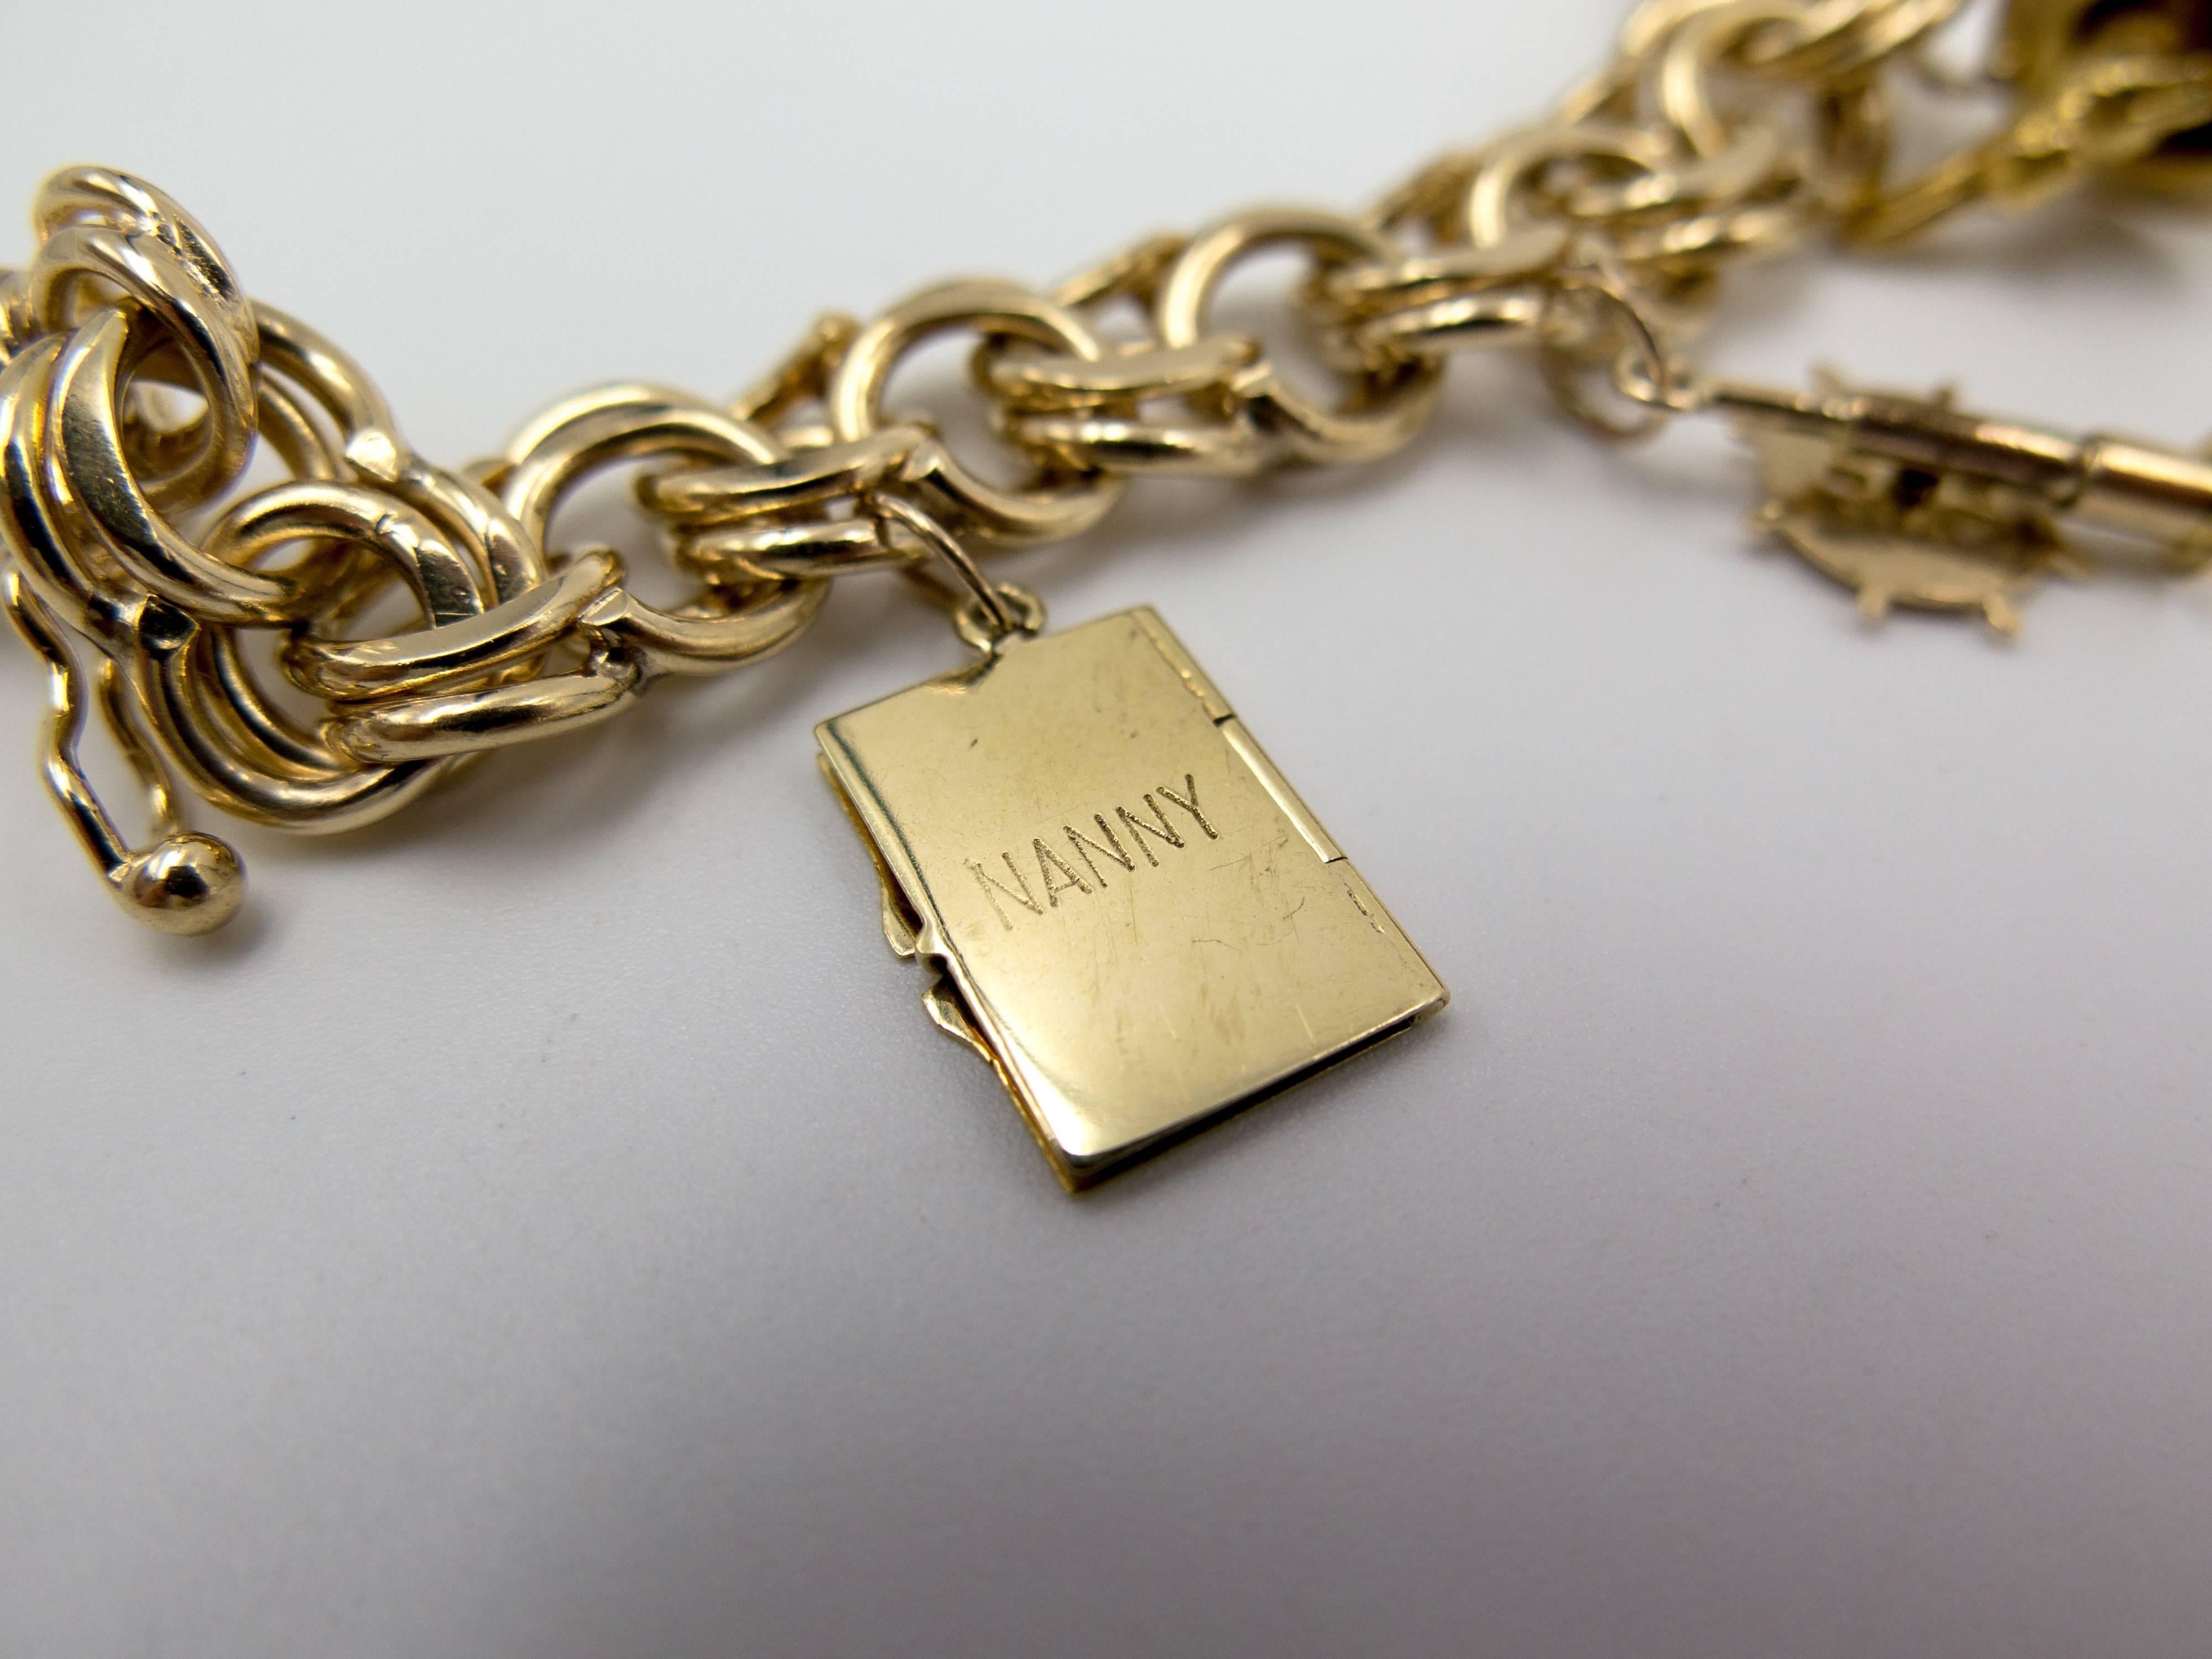 Delightful Travel Story Gold Charm Bracelet 4